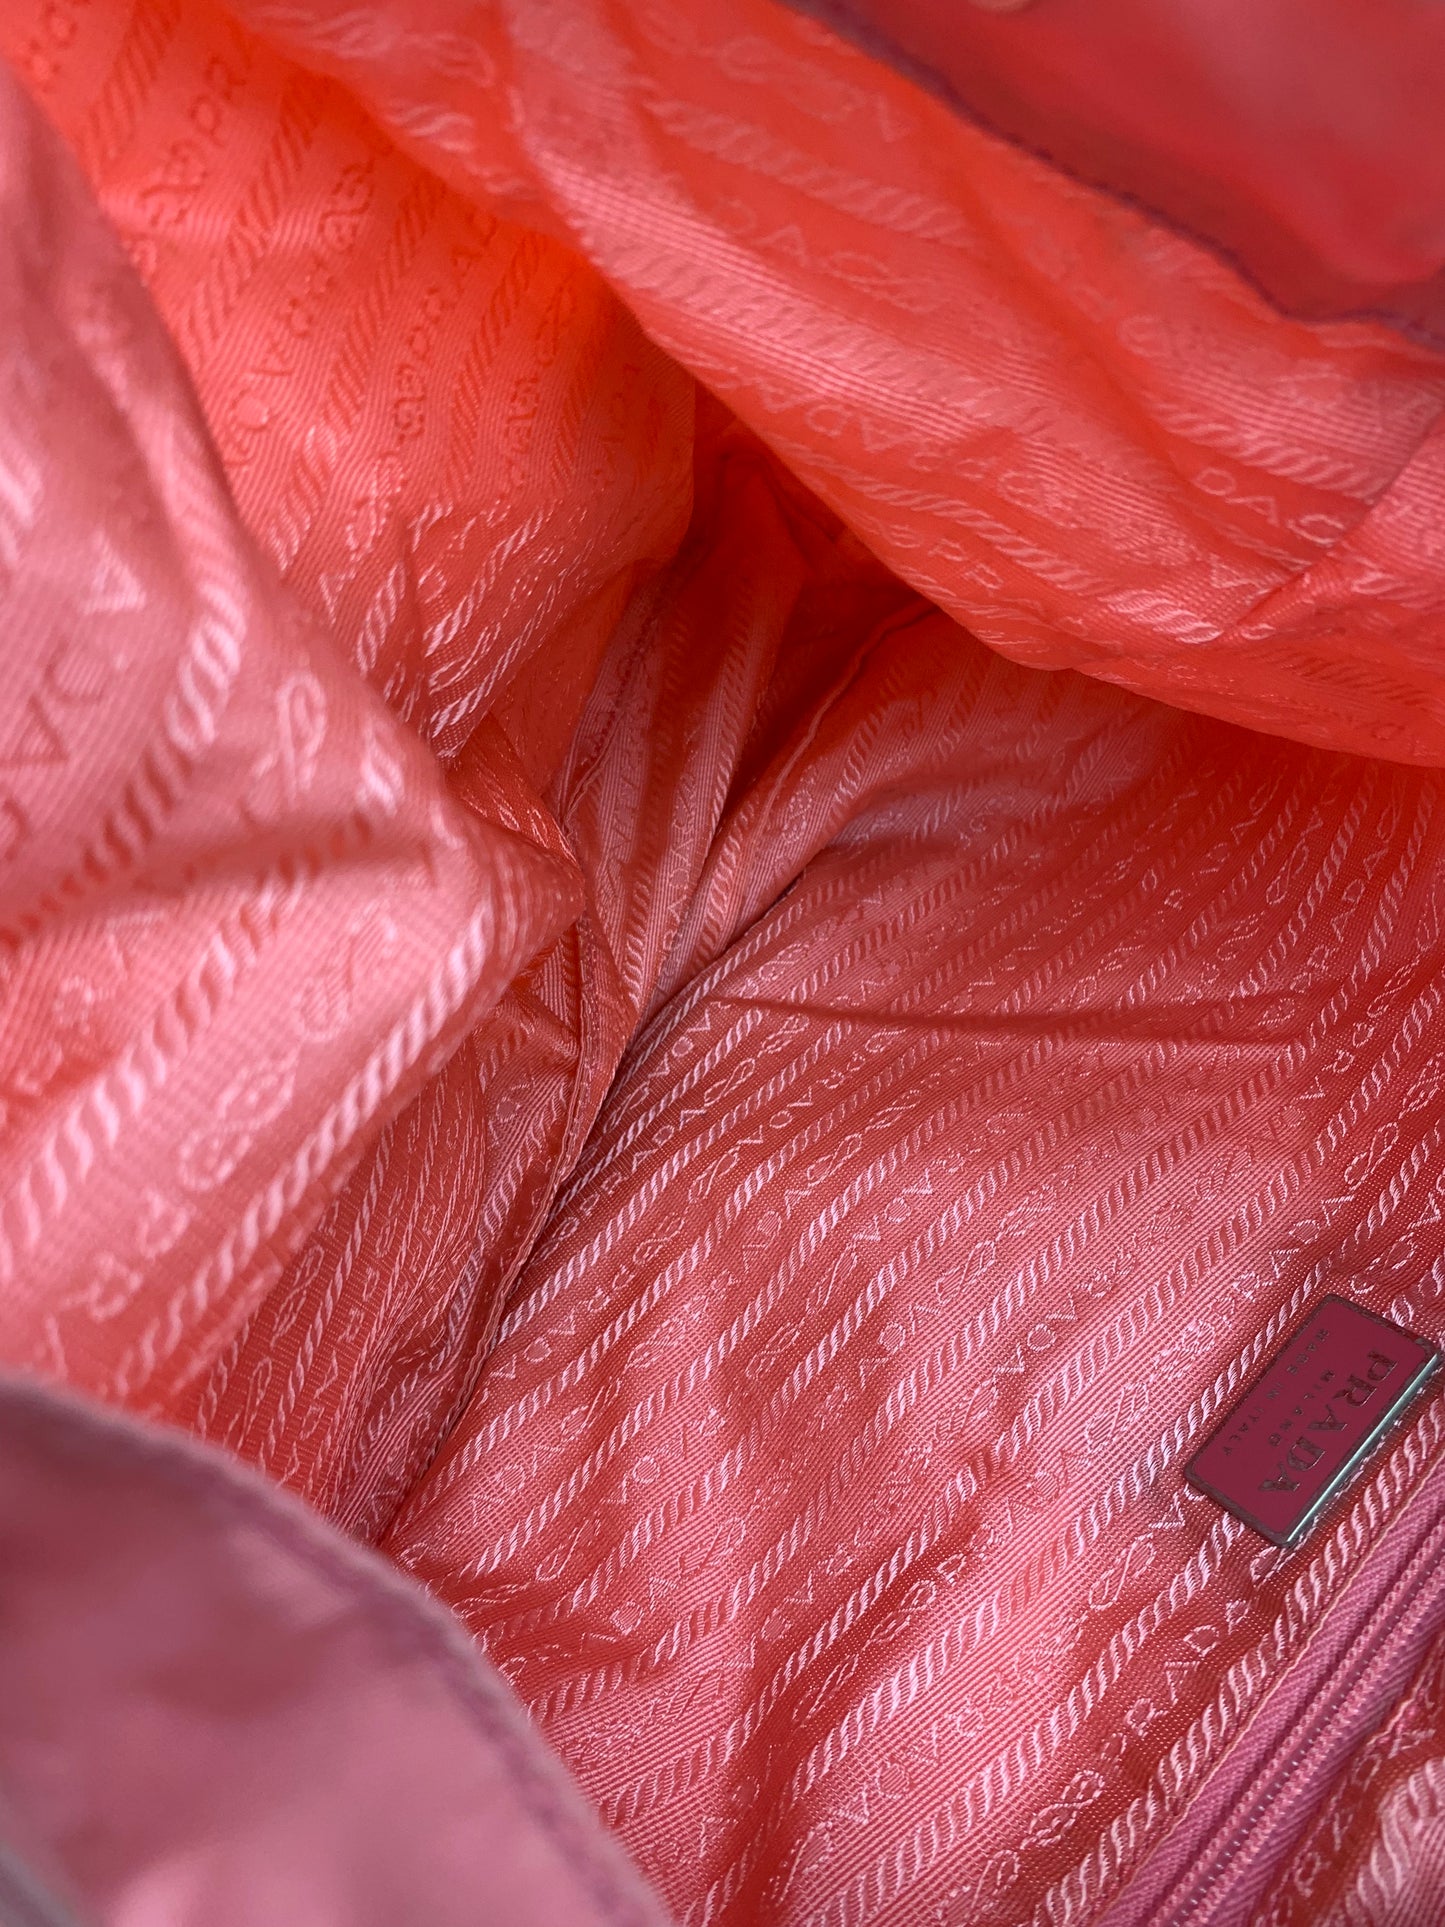 Prada Pink Flame Saffiano Classic Backpack Bag